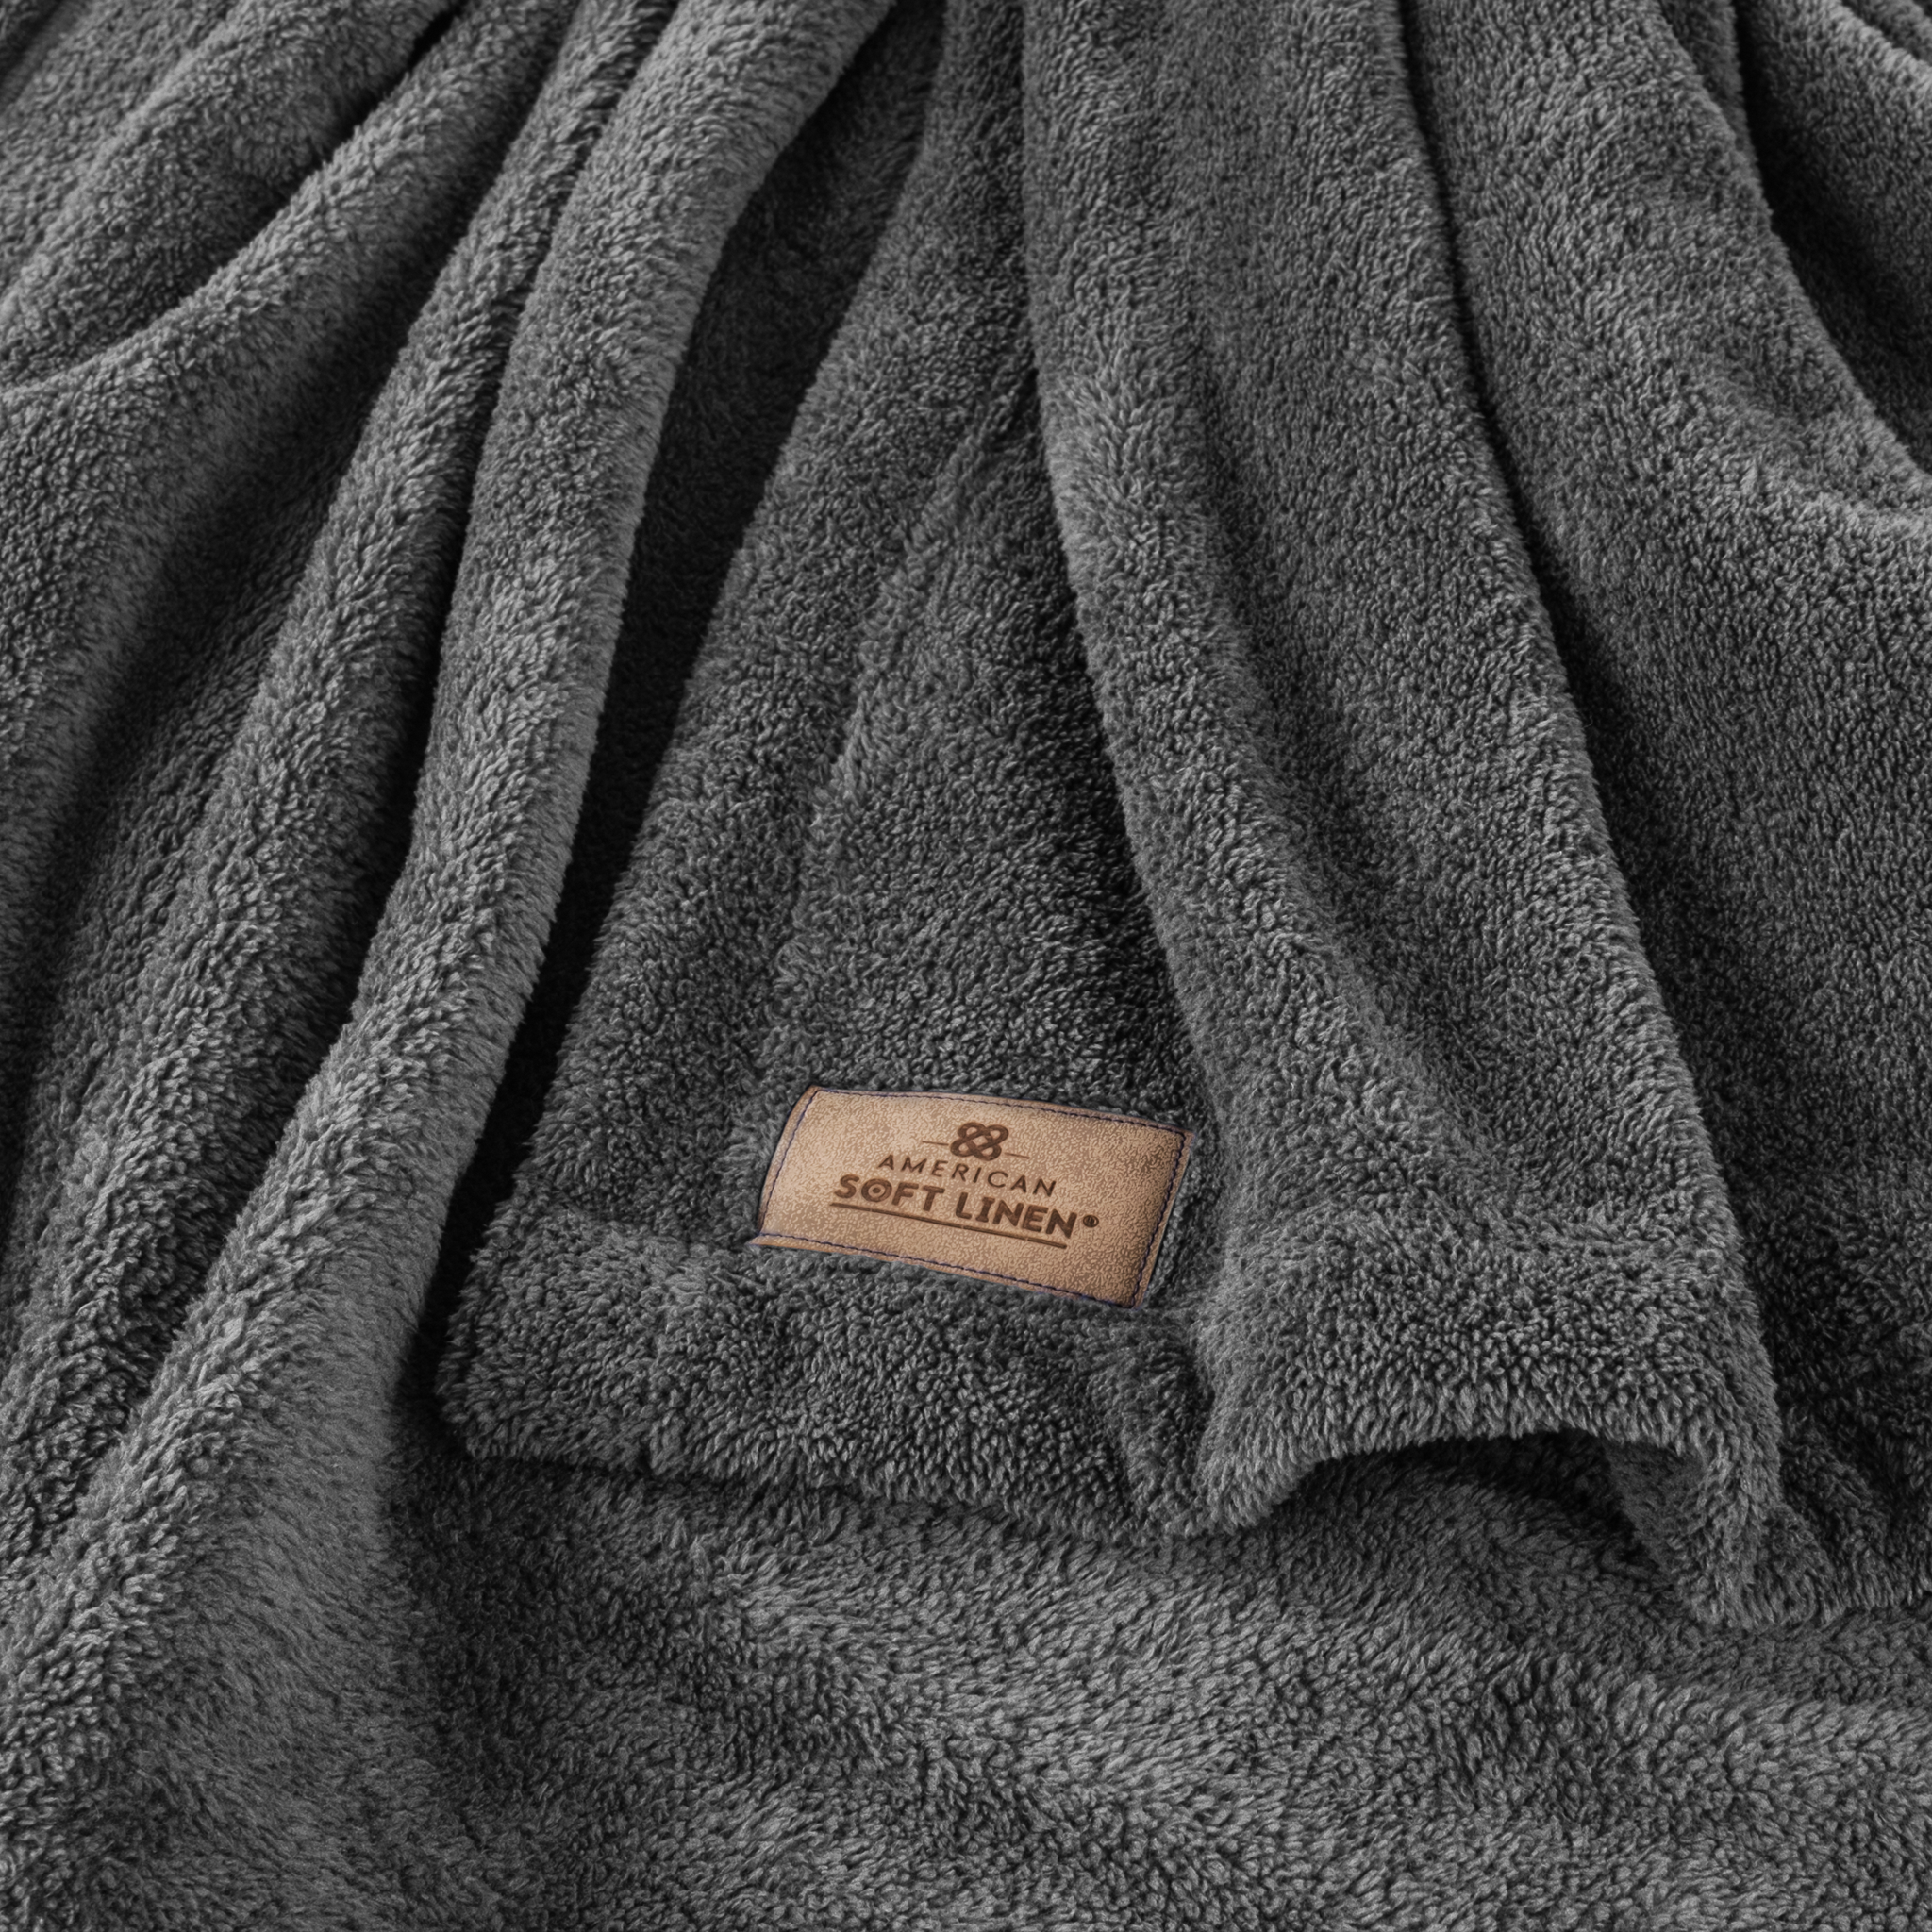 American Soft Linen - Bedding Fleece Blanket - Wholesale - 9 Set Case Pack - Queen Size 85x90 inches - Gray - 4